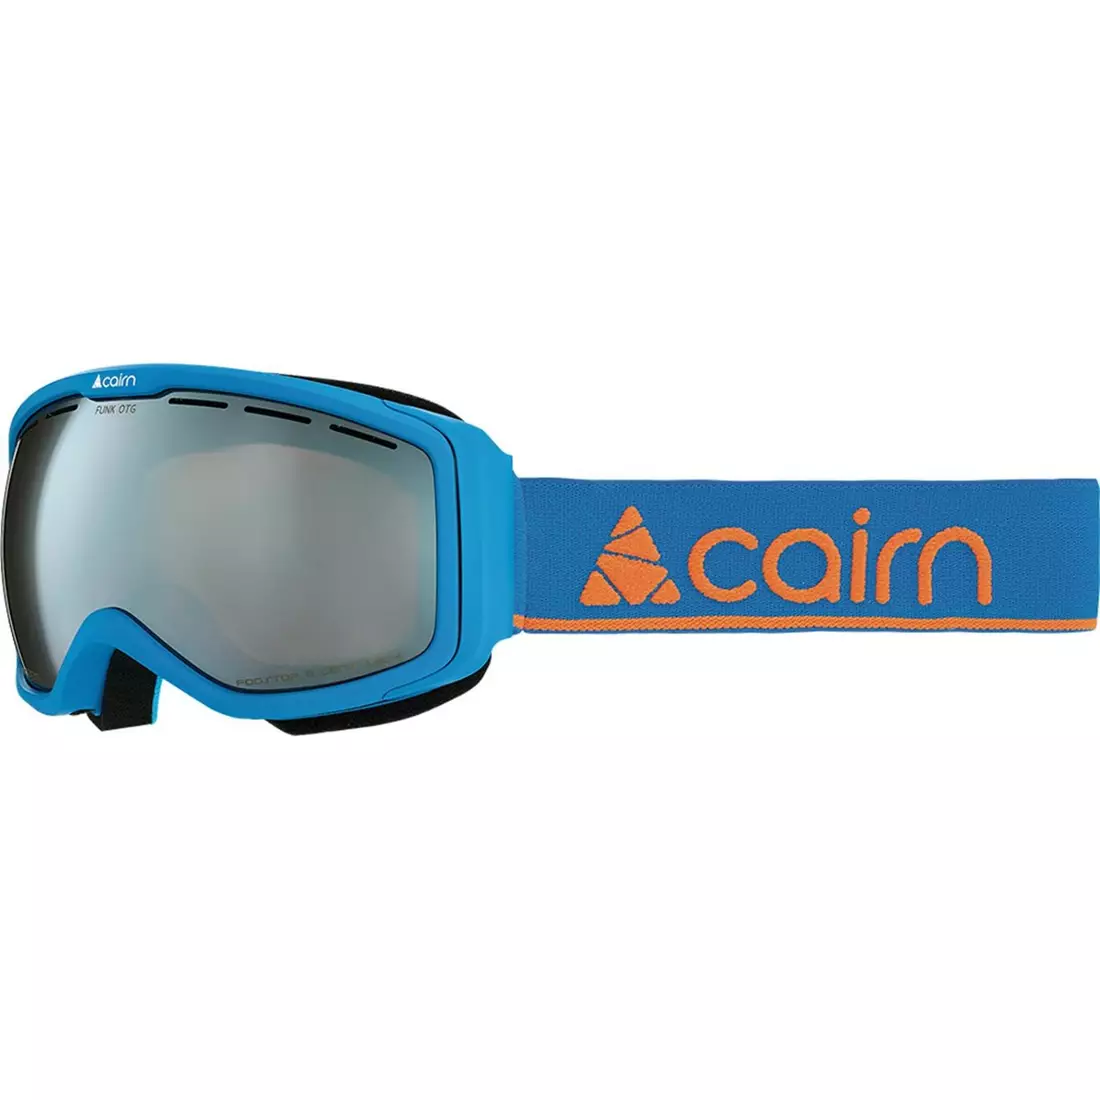 CAIRN juniorské lyžiarske / snowboardové okuliare FUNK OTG SPX3000 blue mat orange